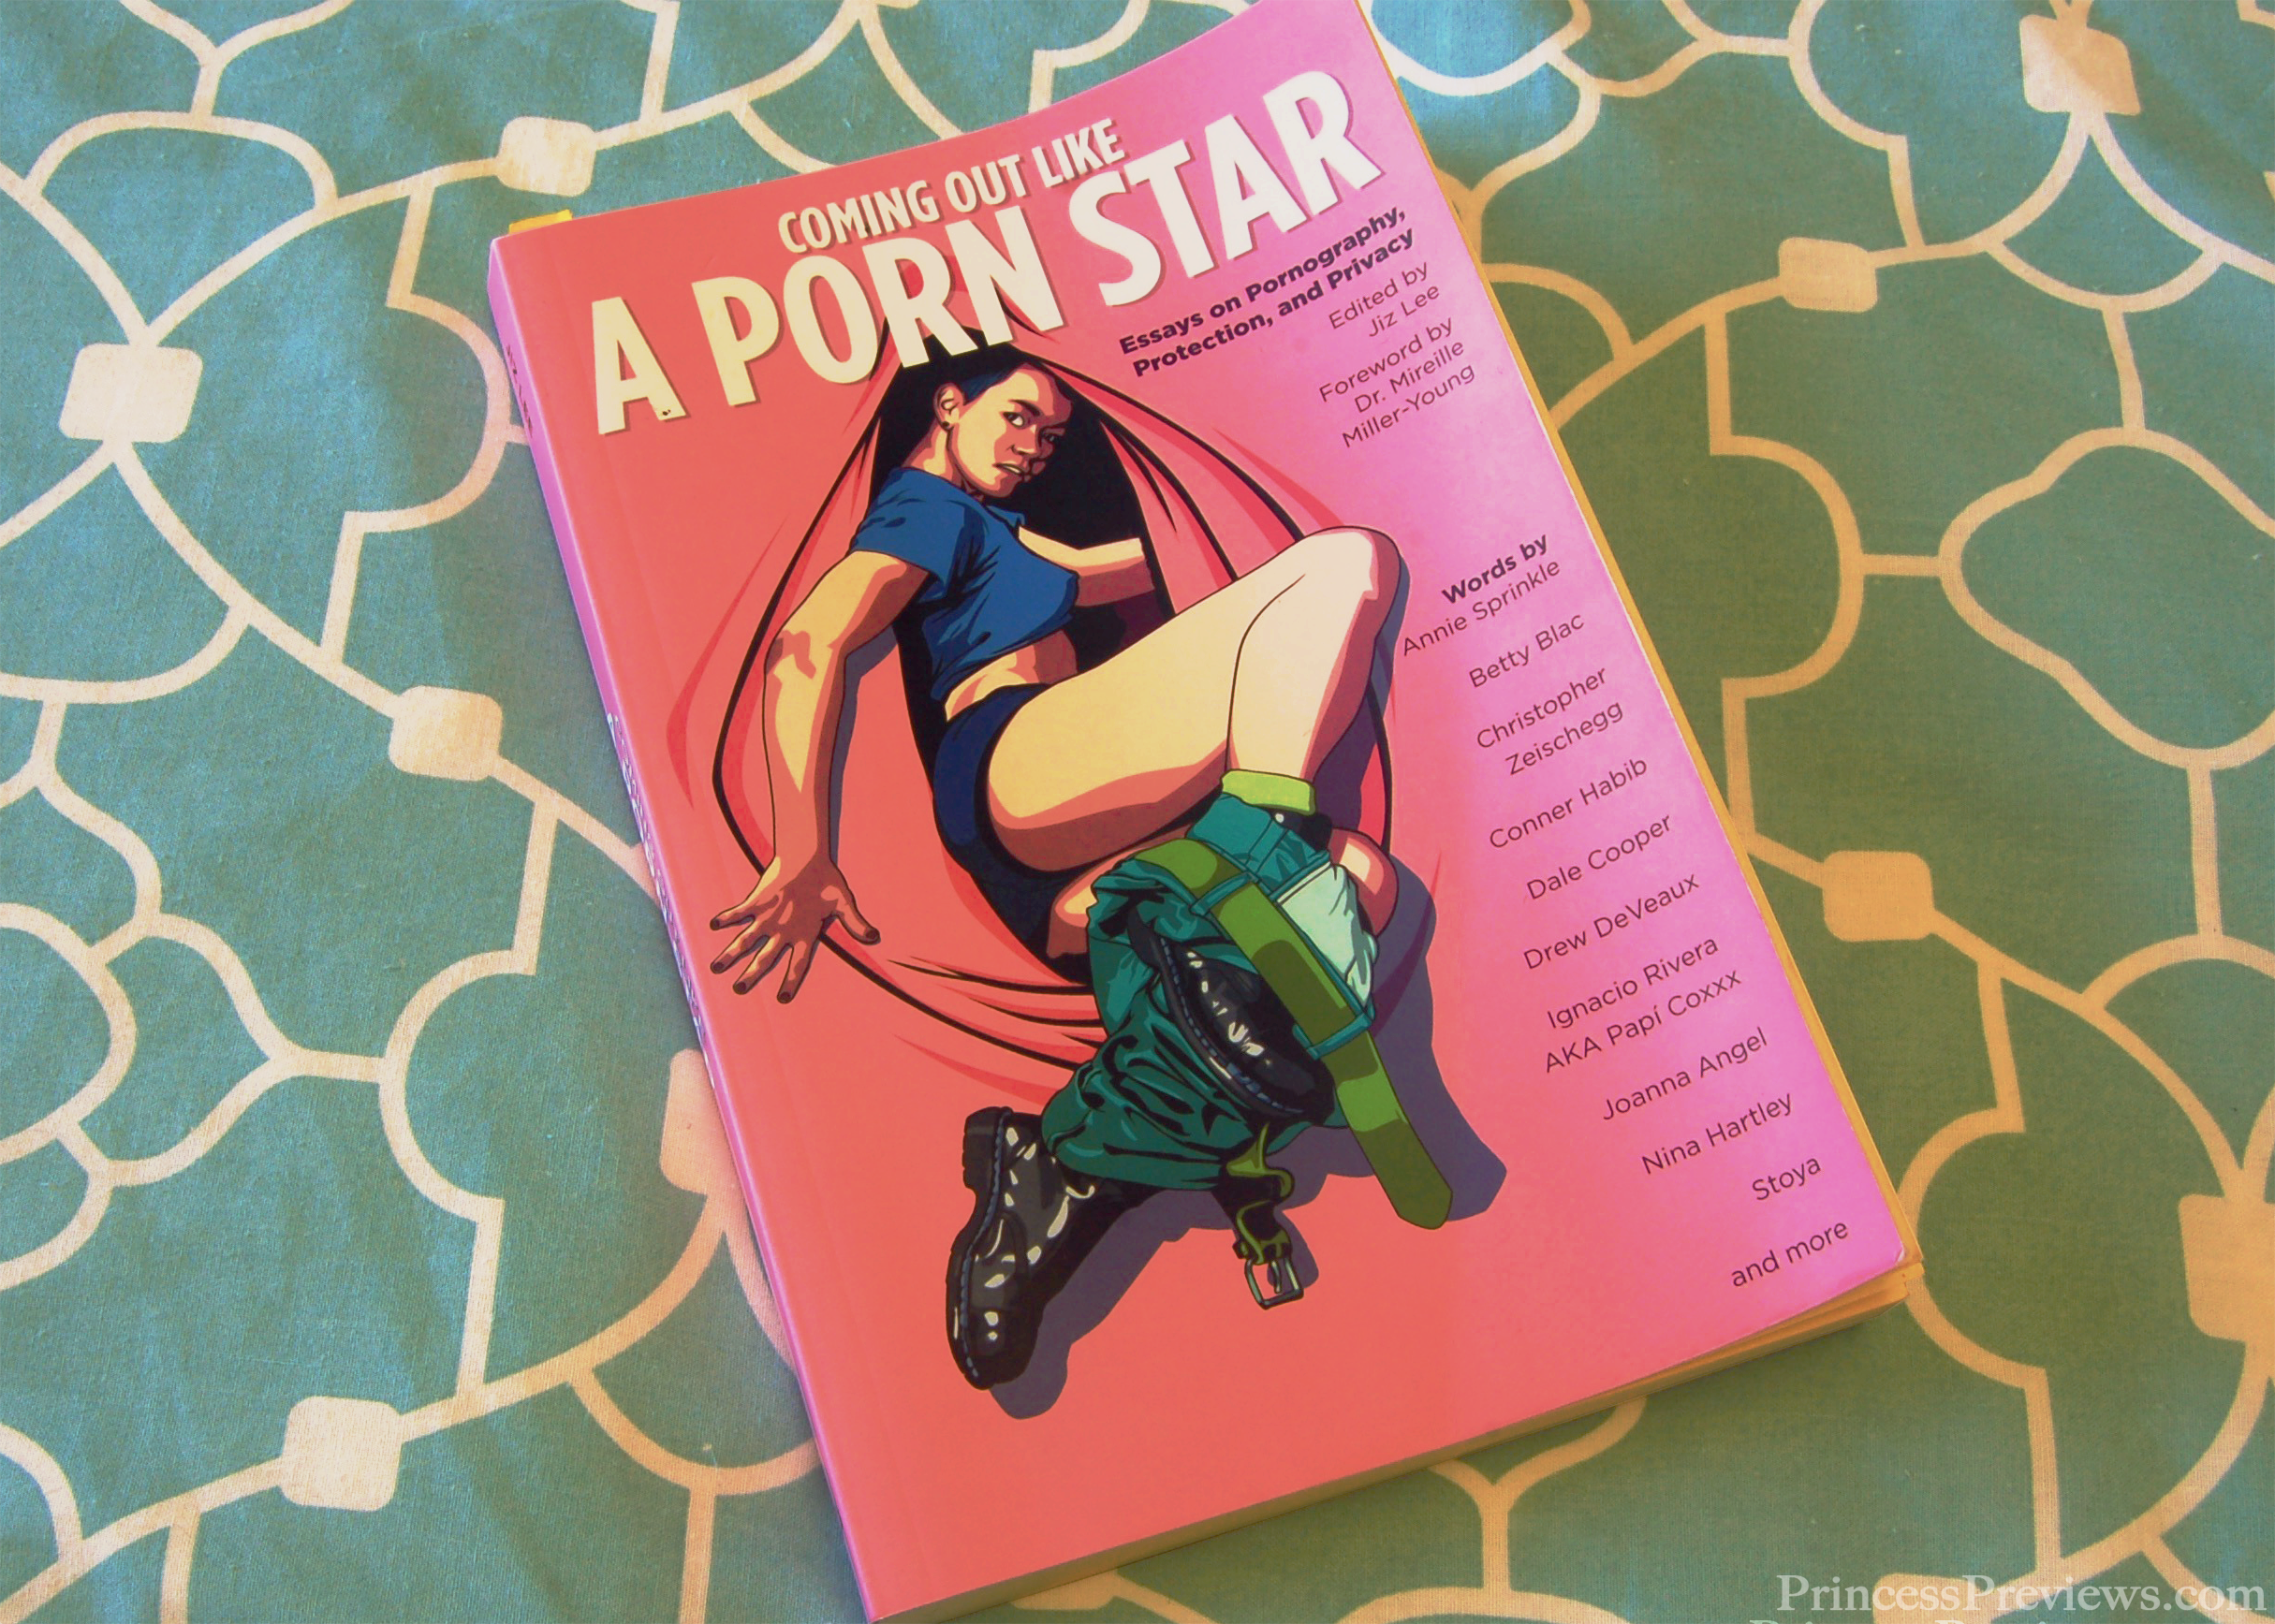 Book Porn Star - Book Review: Coming Out Like A Porn Star - Princess Previews